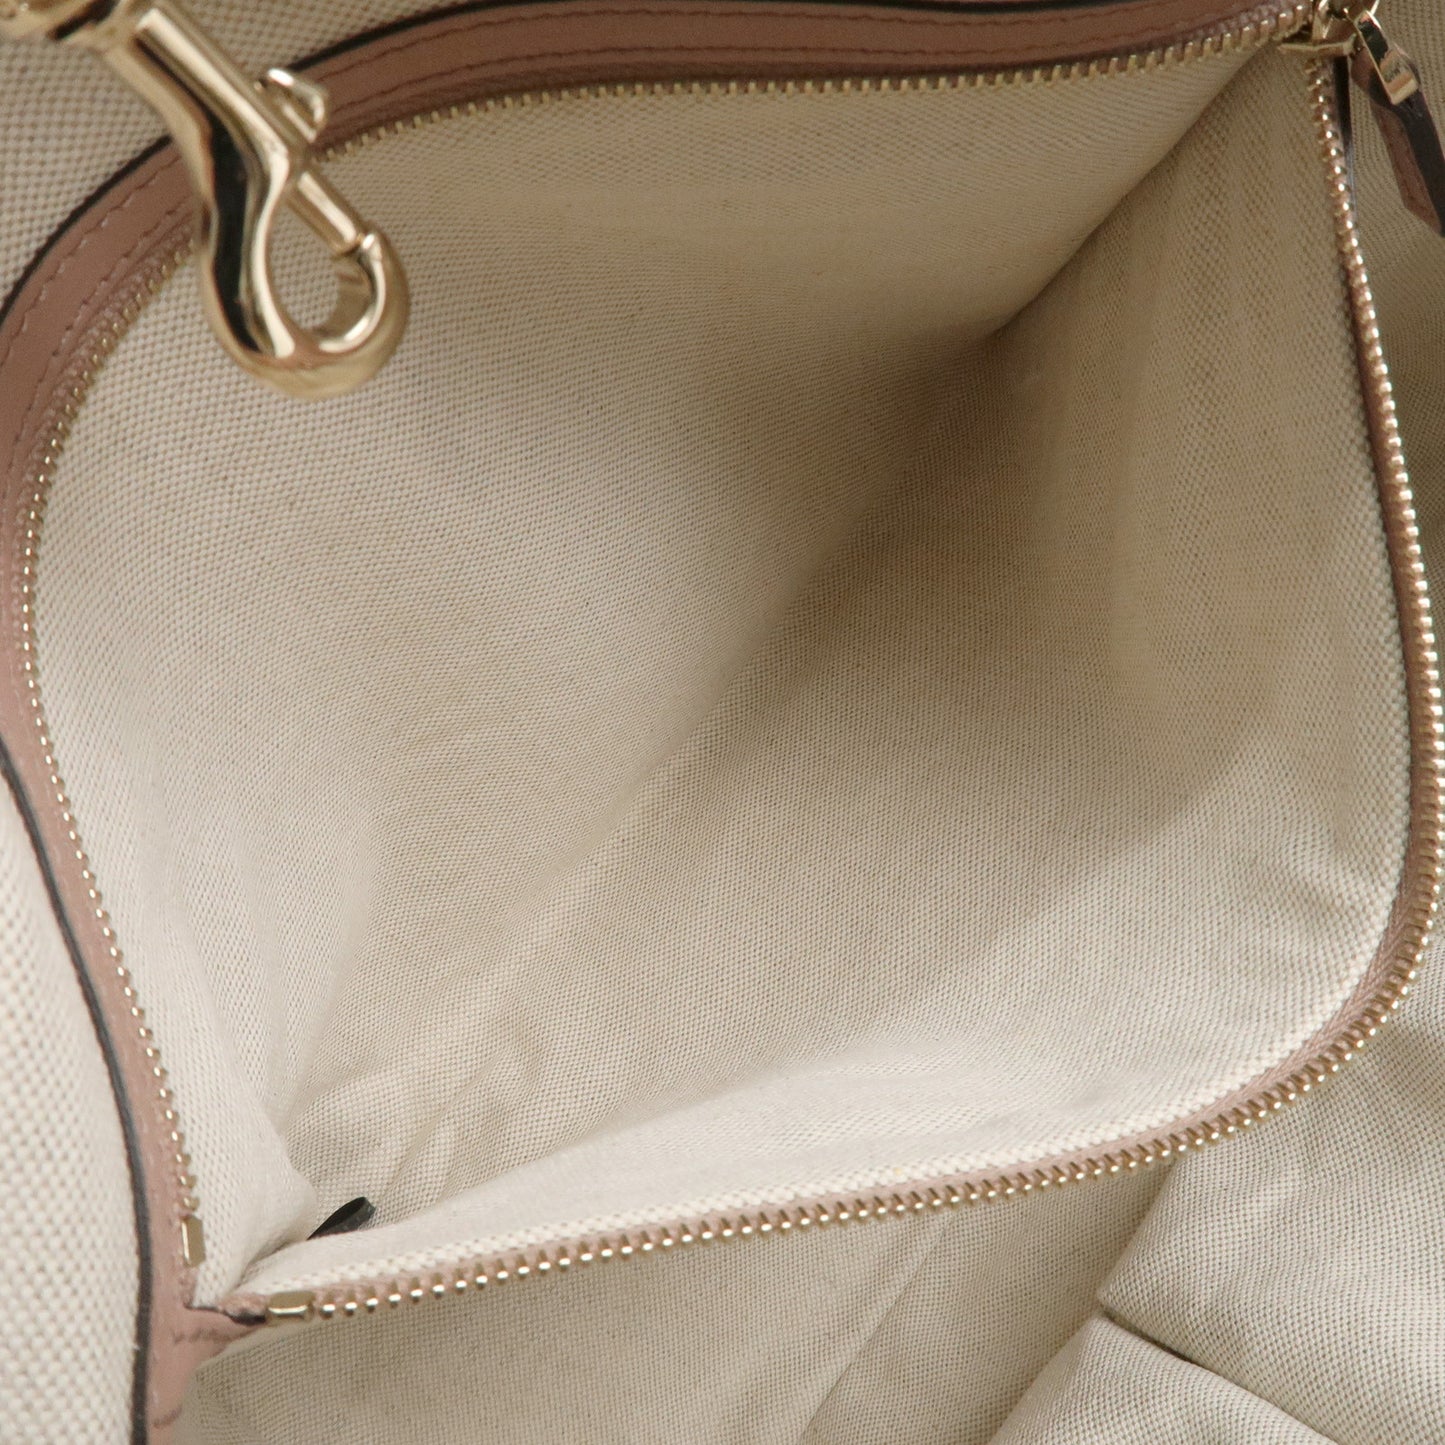 GUCCI Micro Guccissima Patent Leather Tote Bag Pink Beige 309613